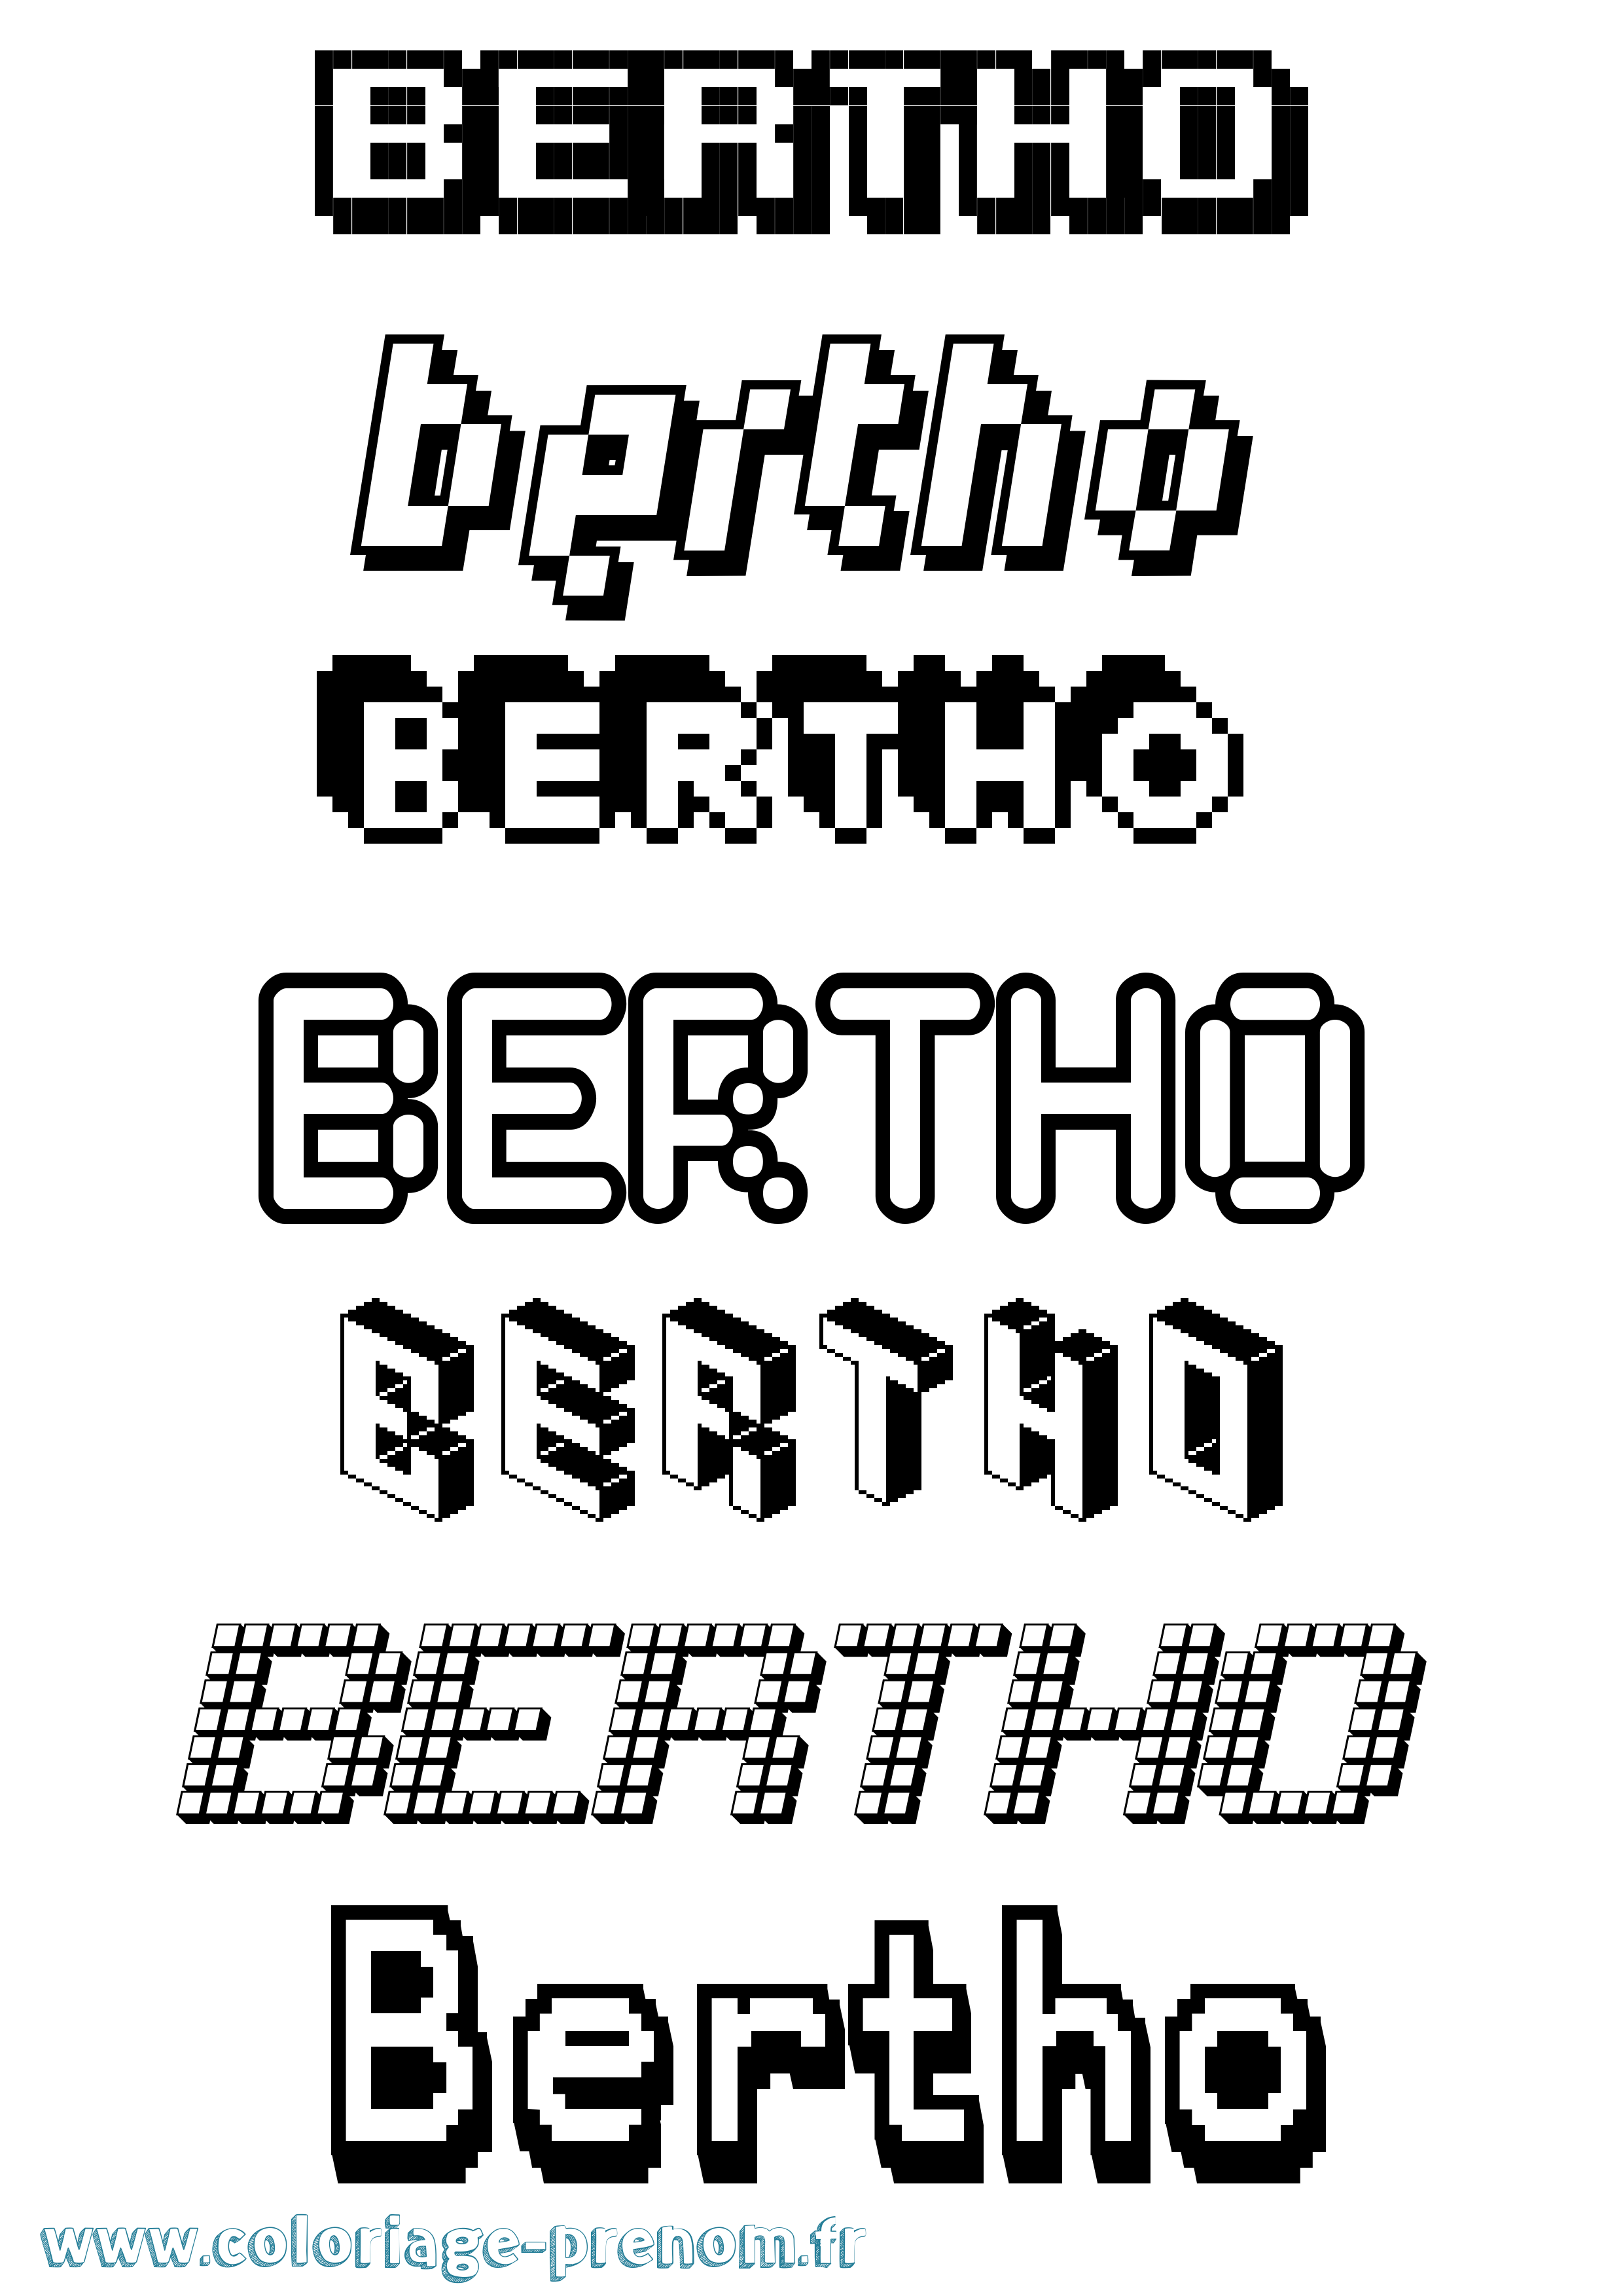 Coloriage prénom Bertho Pixel